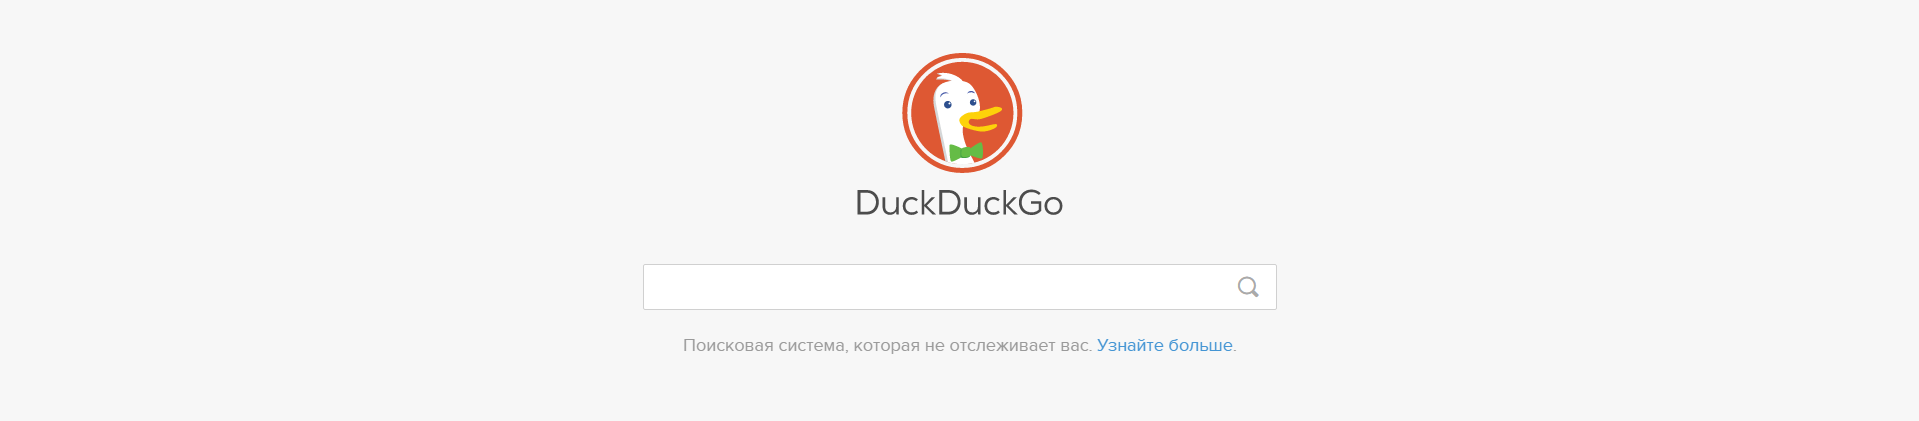 DuckDuckGo пожертвовали 225000$ различным OpenSource проектам - 1